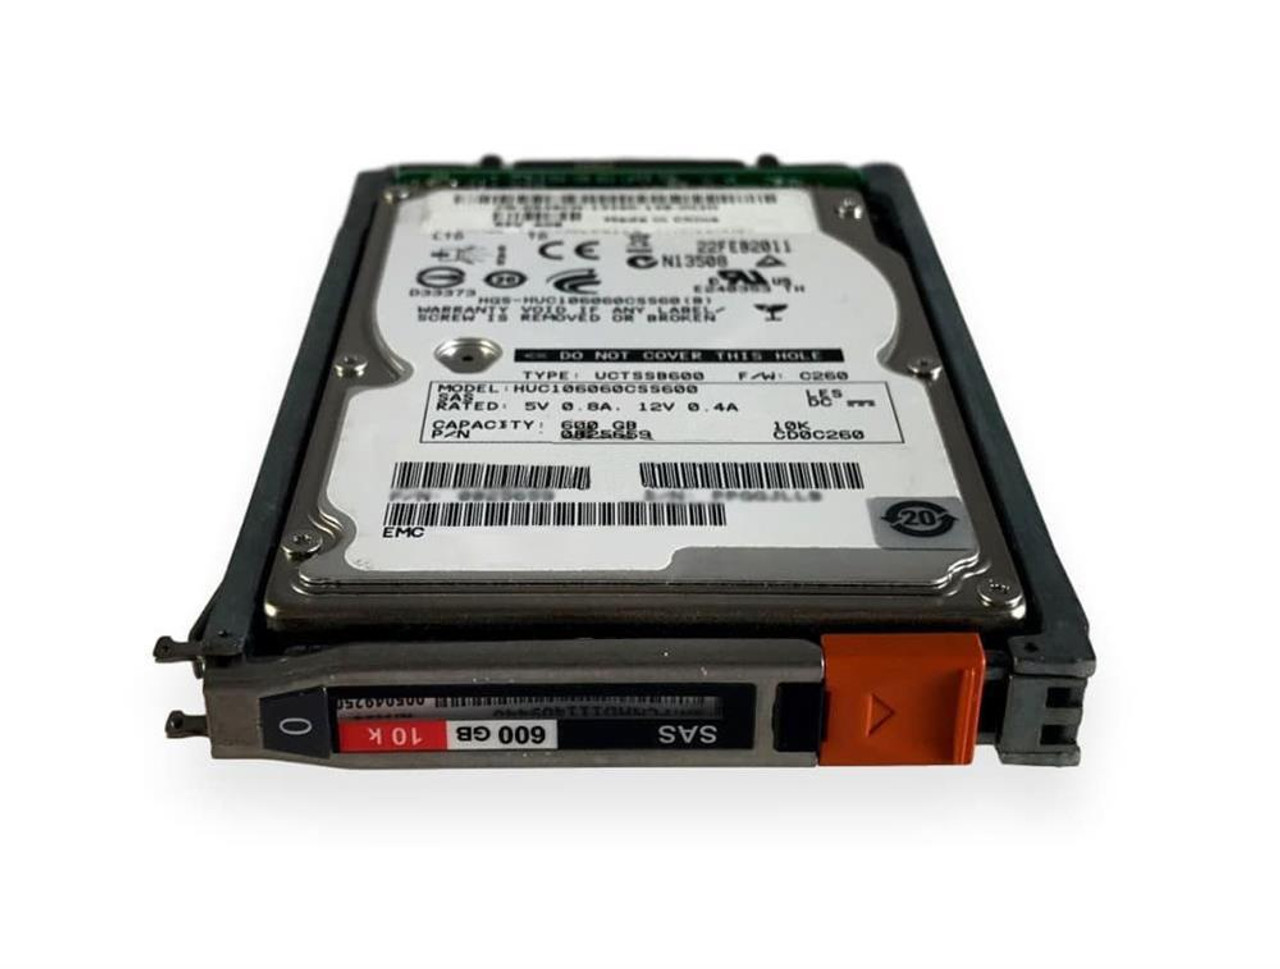 T4-2S10-600TU EMC 600GB 10000RPM SAS 12Gbps 2.5-inch Internal Hard Drive for 25 x 2.5 Enclosure